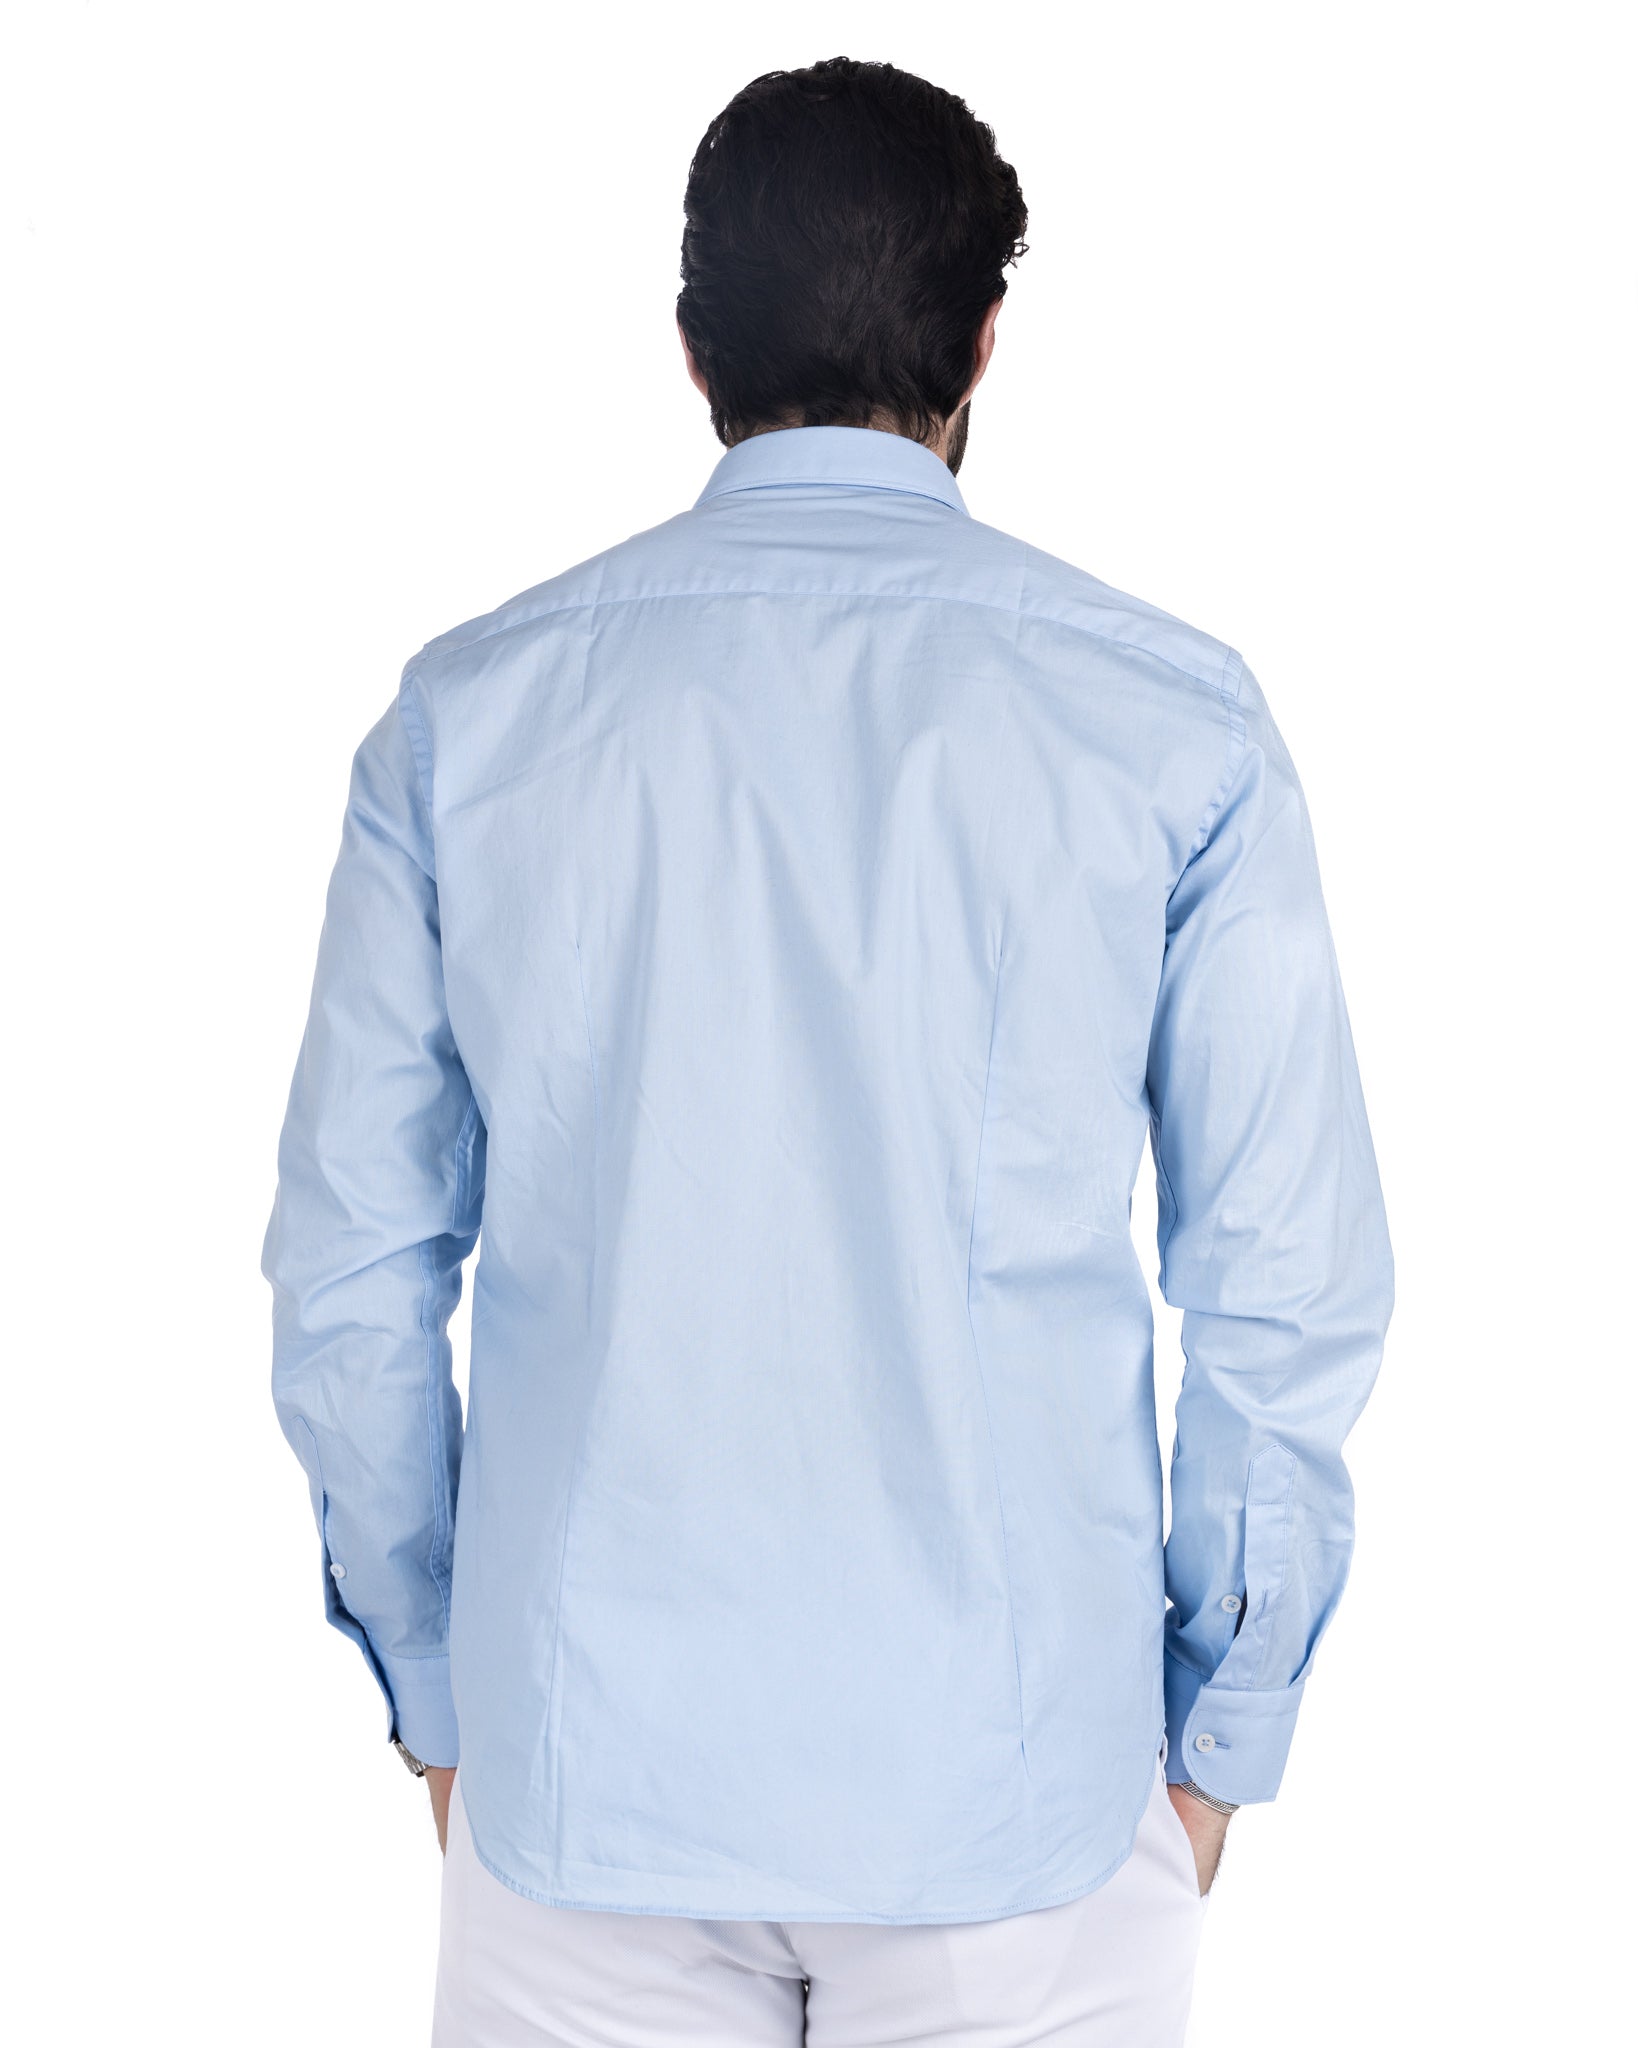 Camicia - basic classica azzurra in cotone